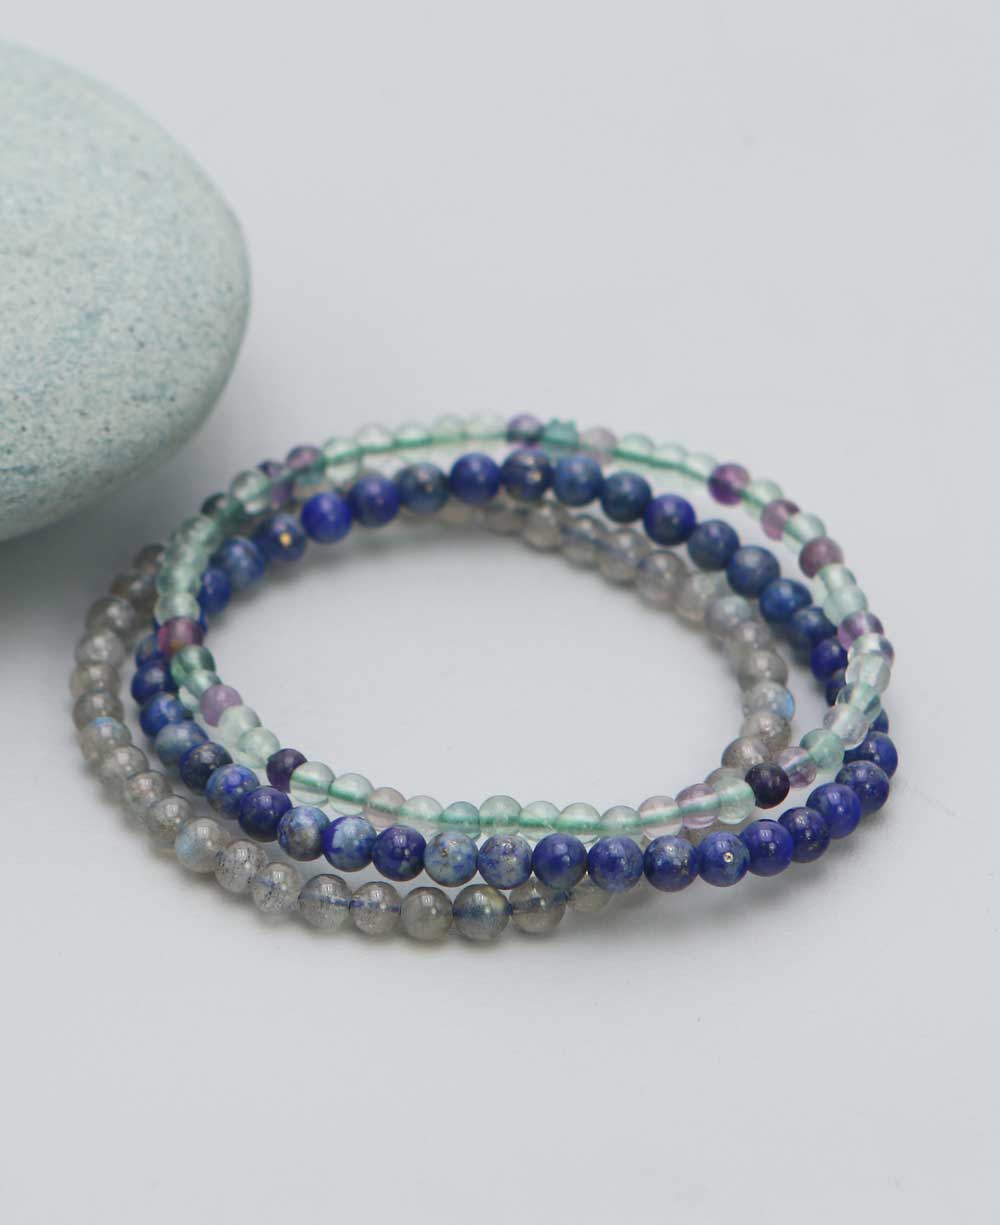 Gemstone Energy Bracelets for Insight and Intuition, Set of 3 - Bracelets